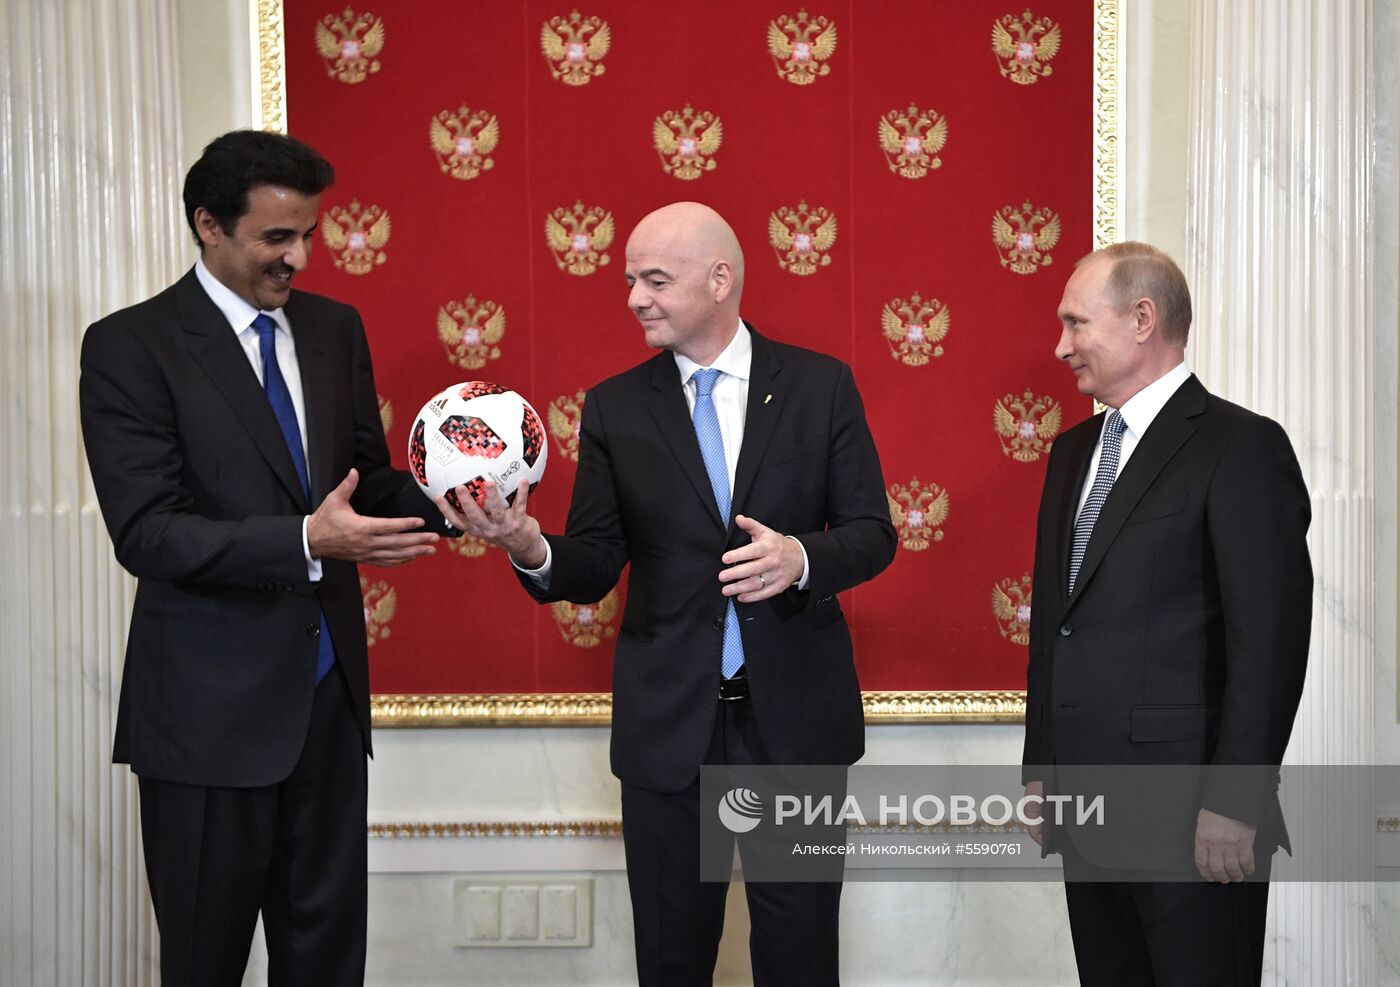 Президент РФ В. Путин принял участие в церемонии передачи Катару полномочий на проведение ЧМ-2022 по футболу